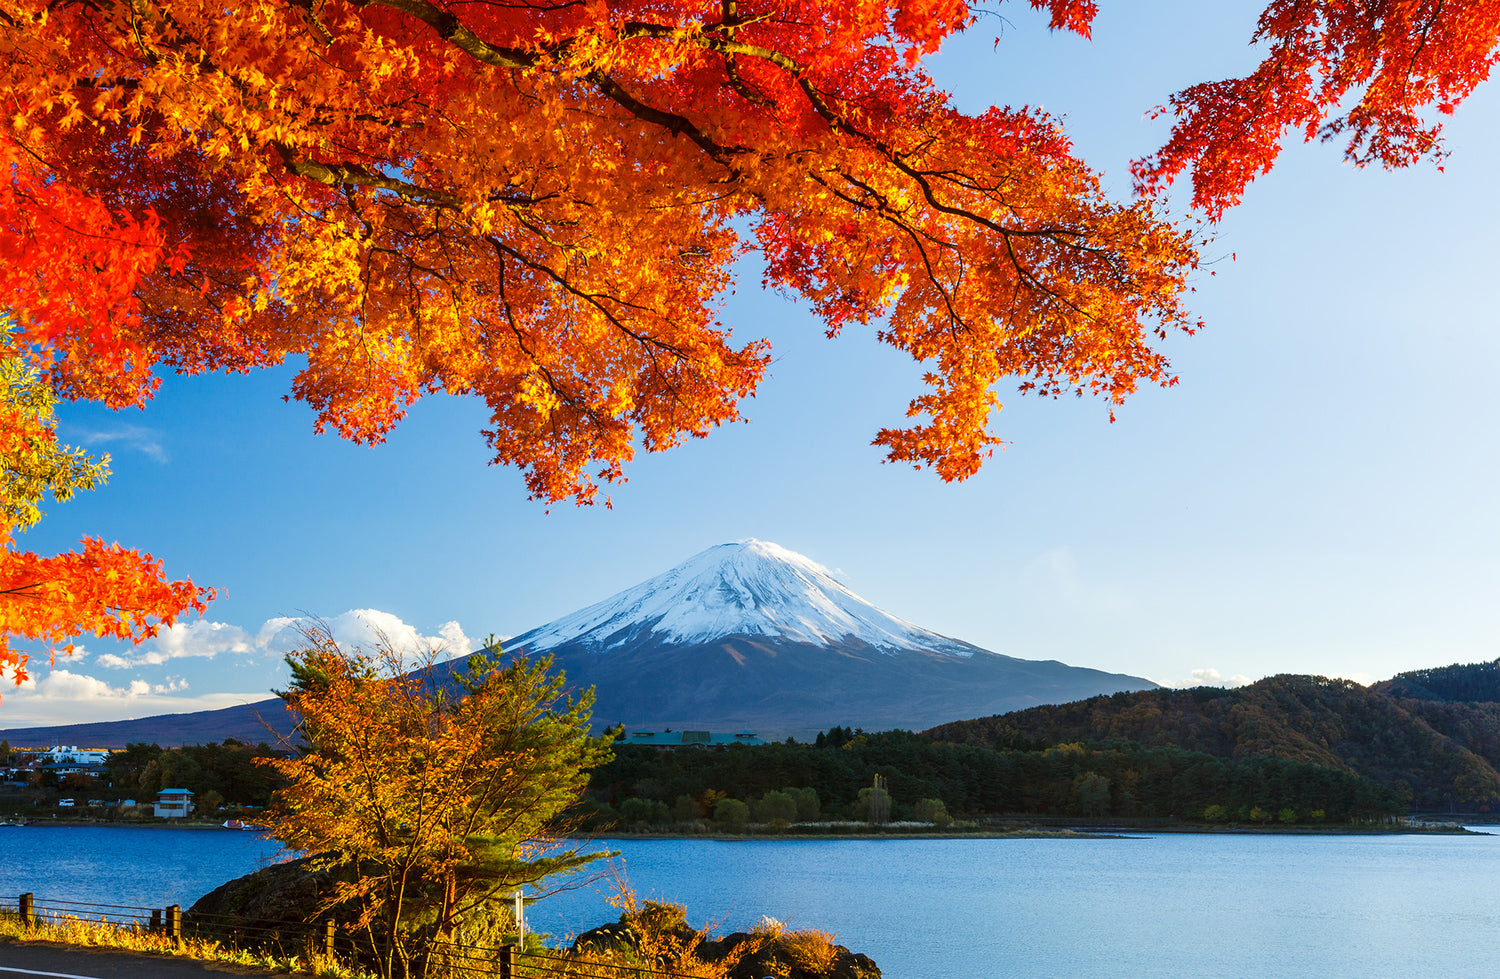 Sky Train Convertible Backpack Conquers Mount Fuji